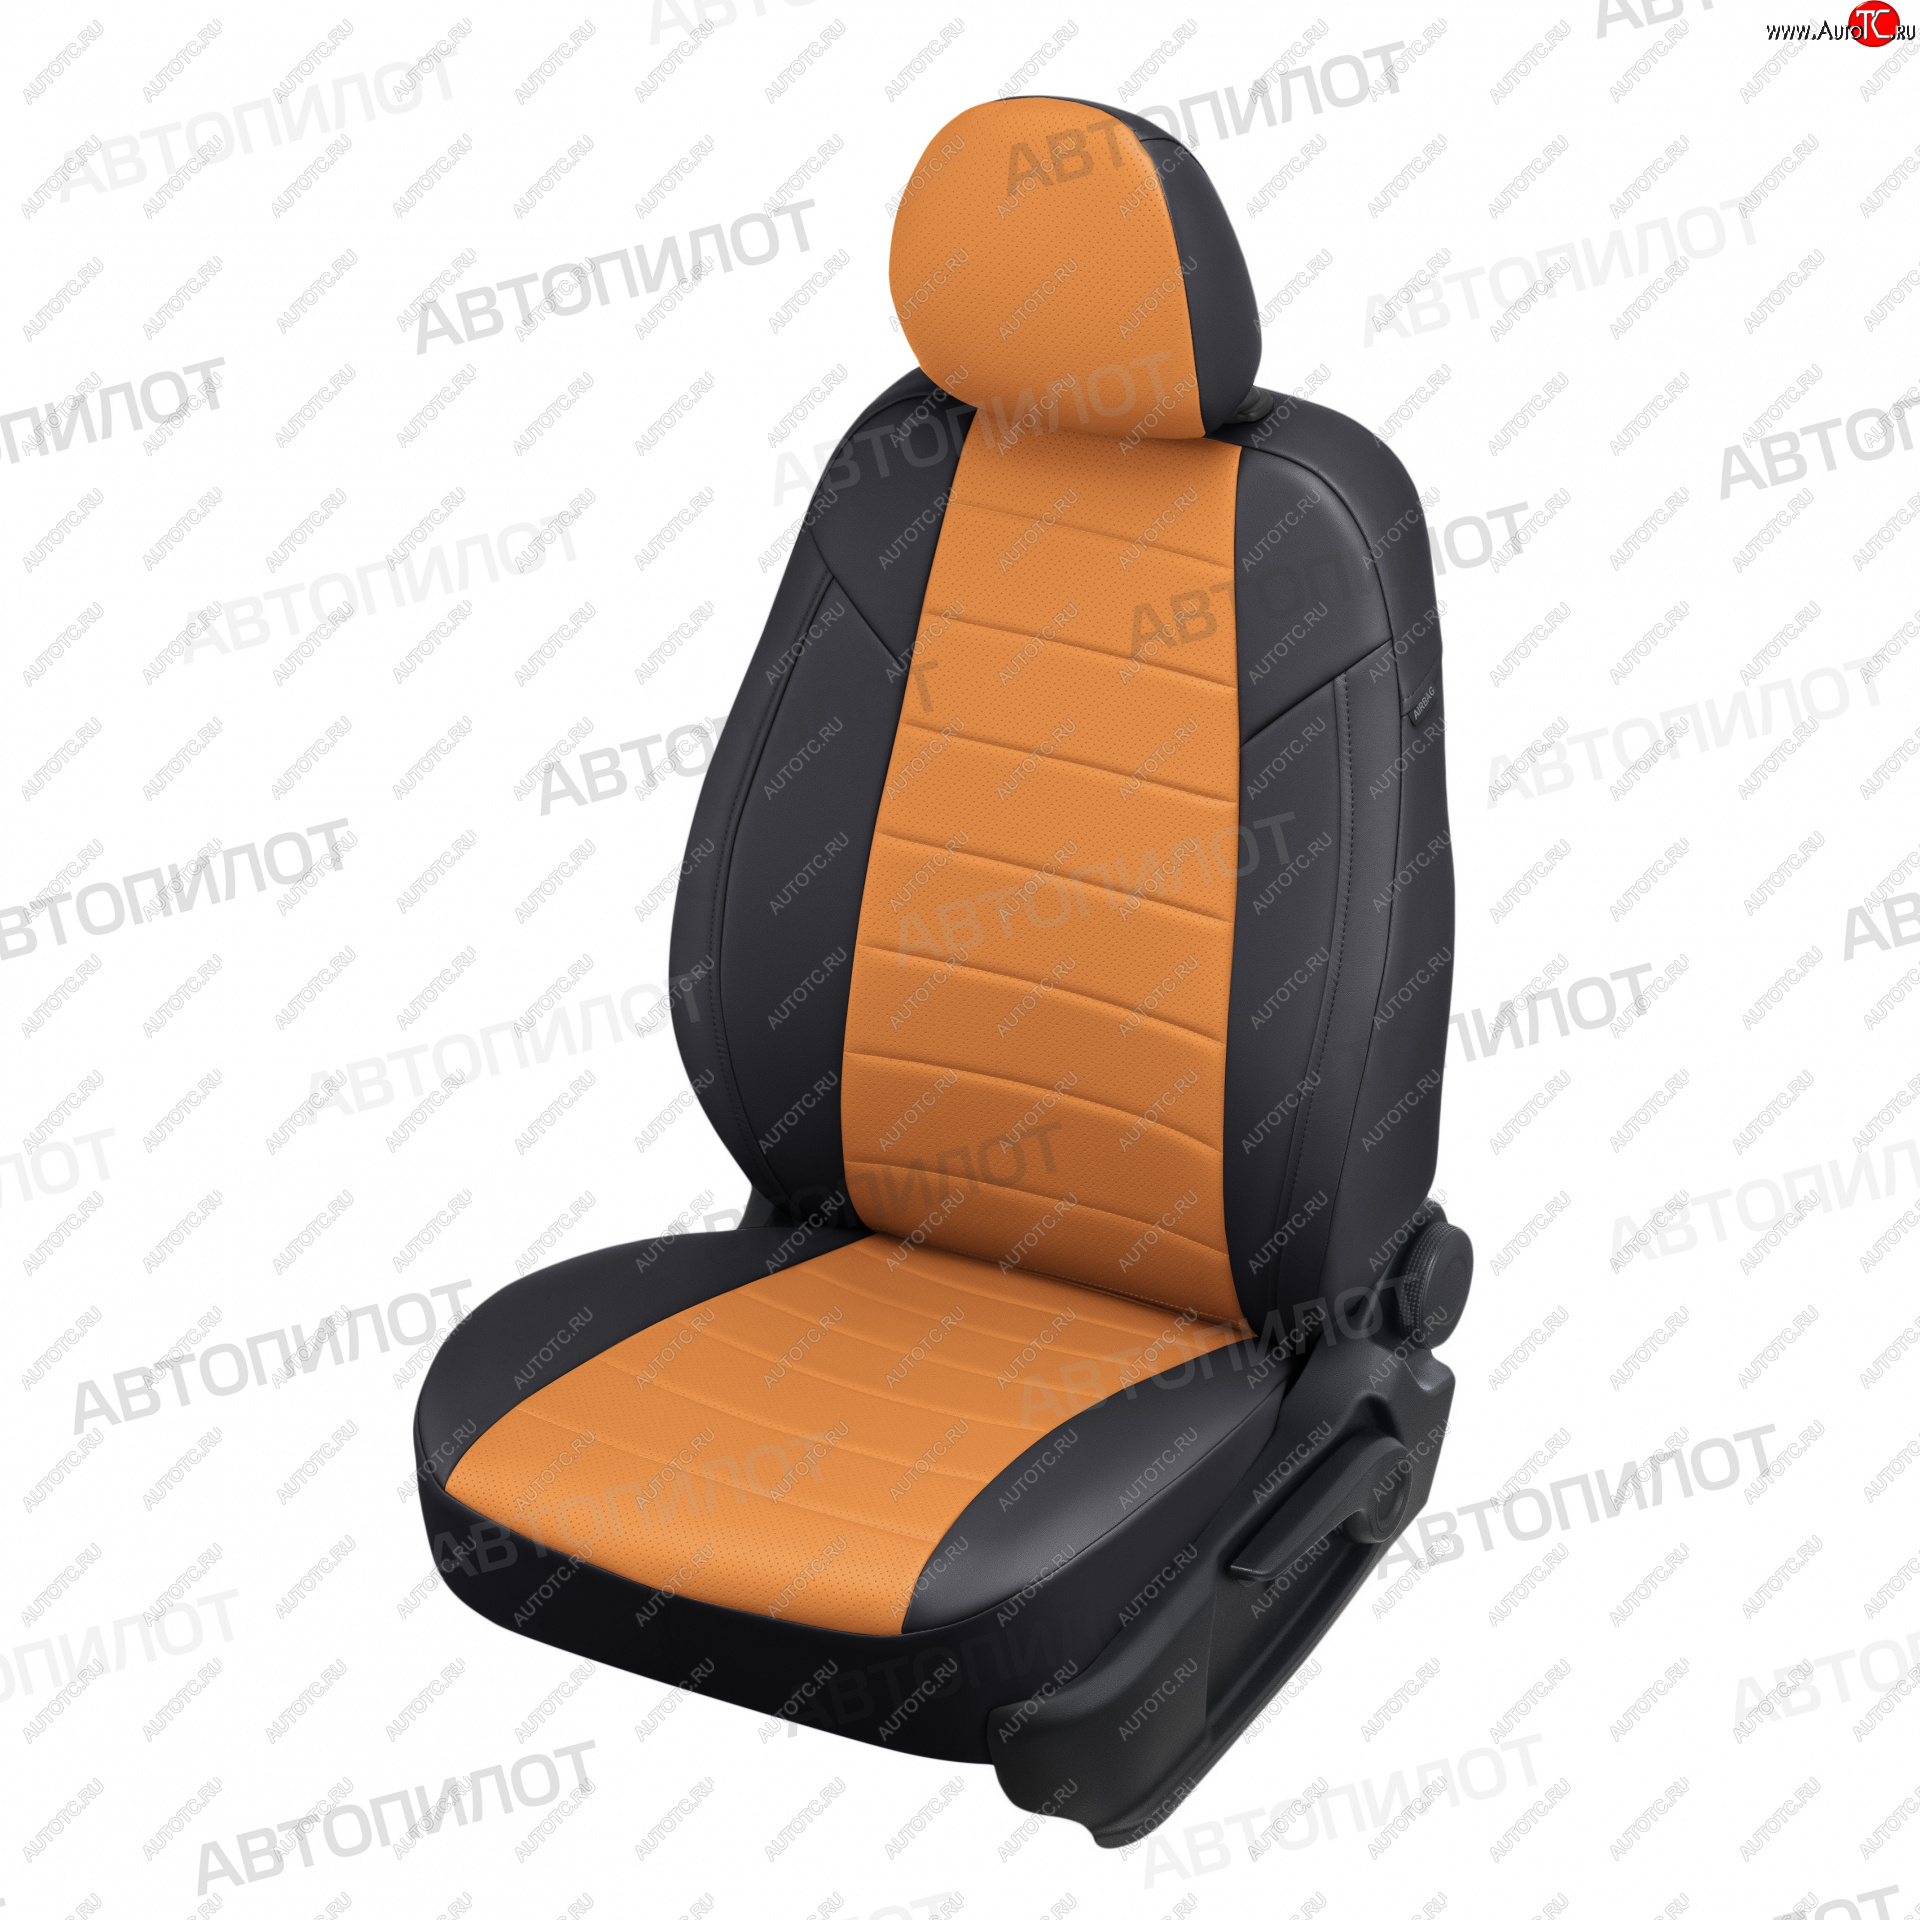 13 449 р.  Чехлы сидений (экокожа) Автопилот  Hyundai Sonata  NF (2004-2010) (черный/оранж)